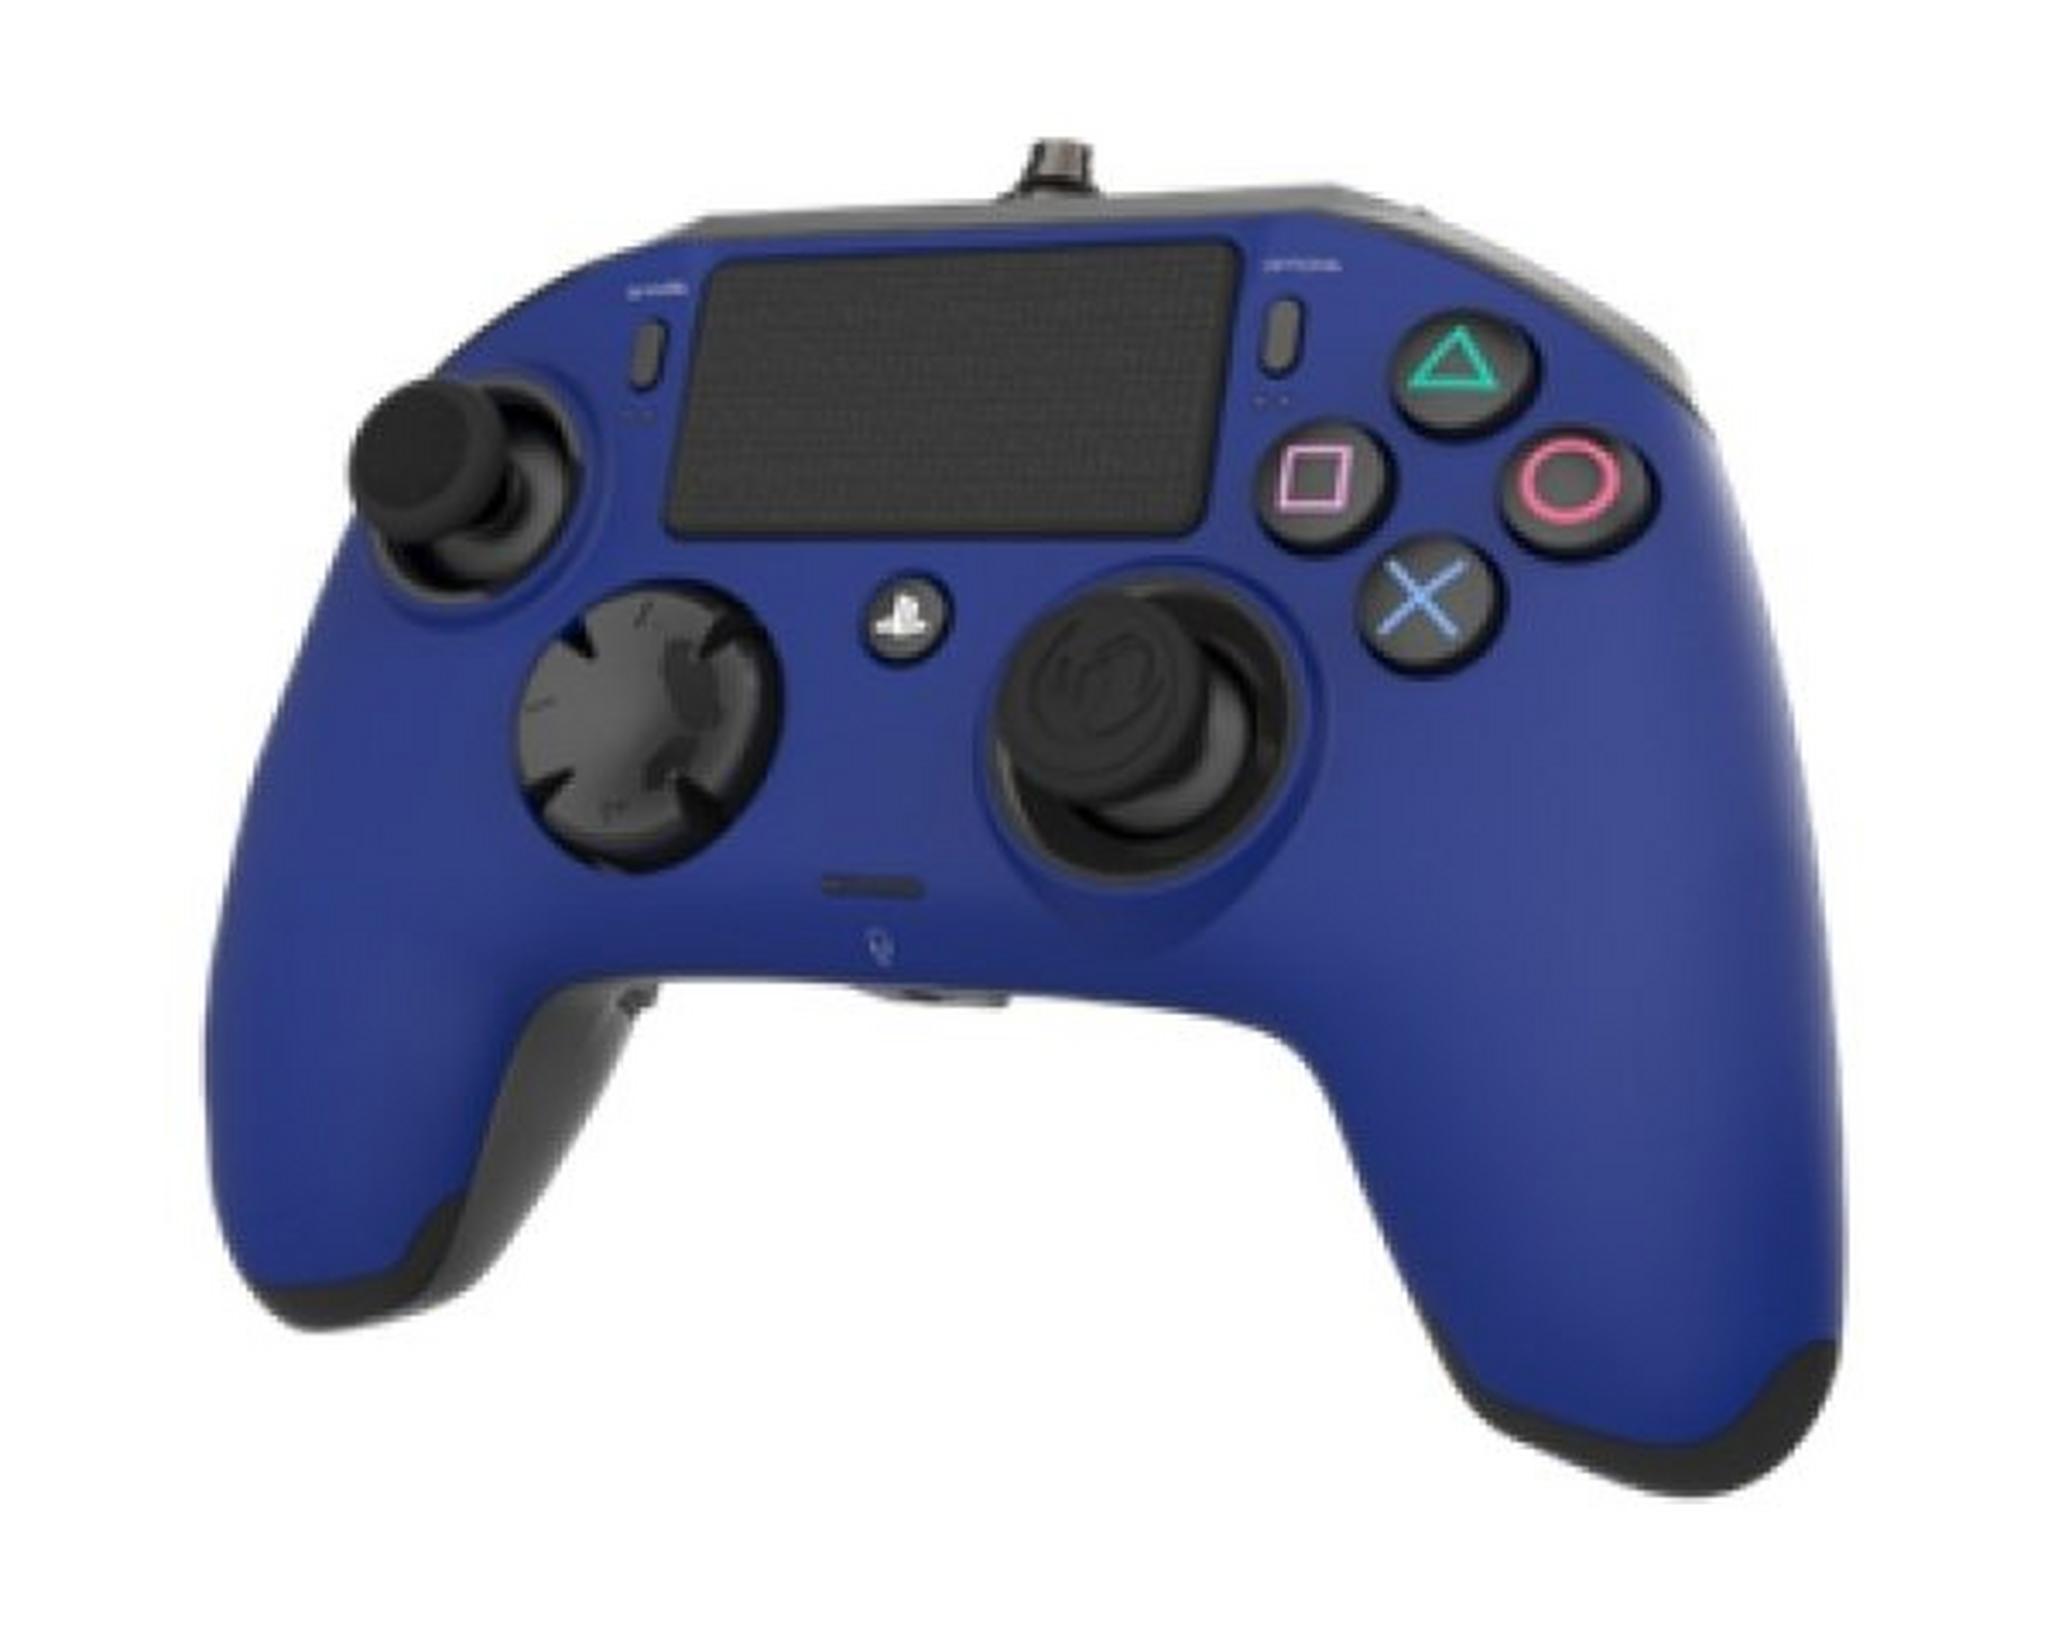 Bigben Nacon Revolution Pro Controller For PS4 - Blue